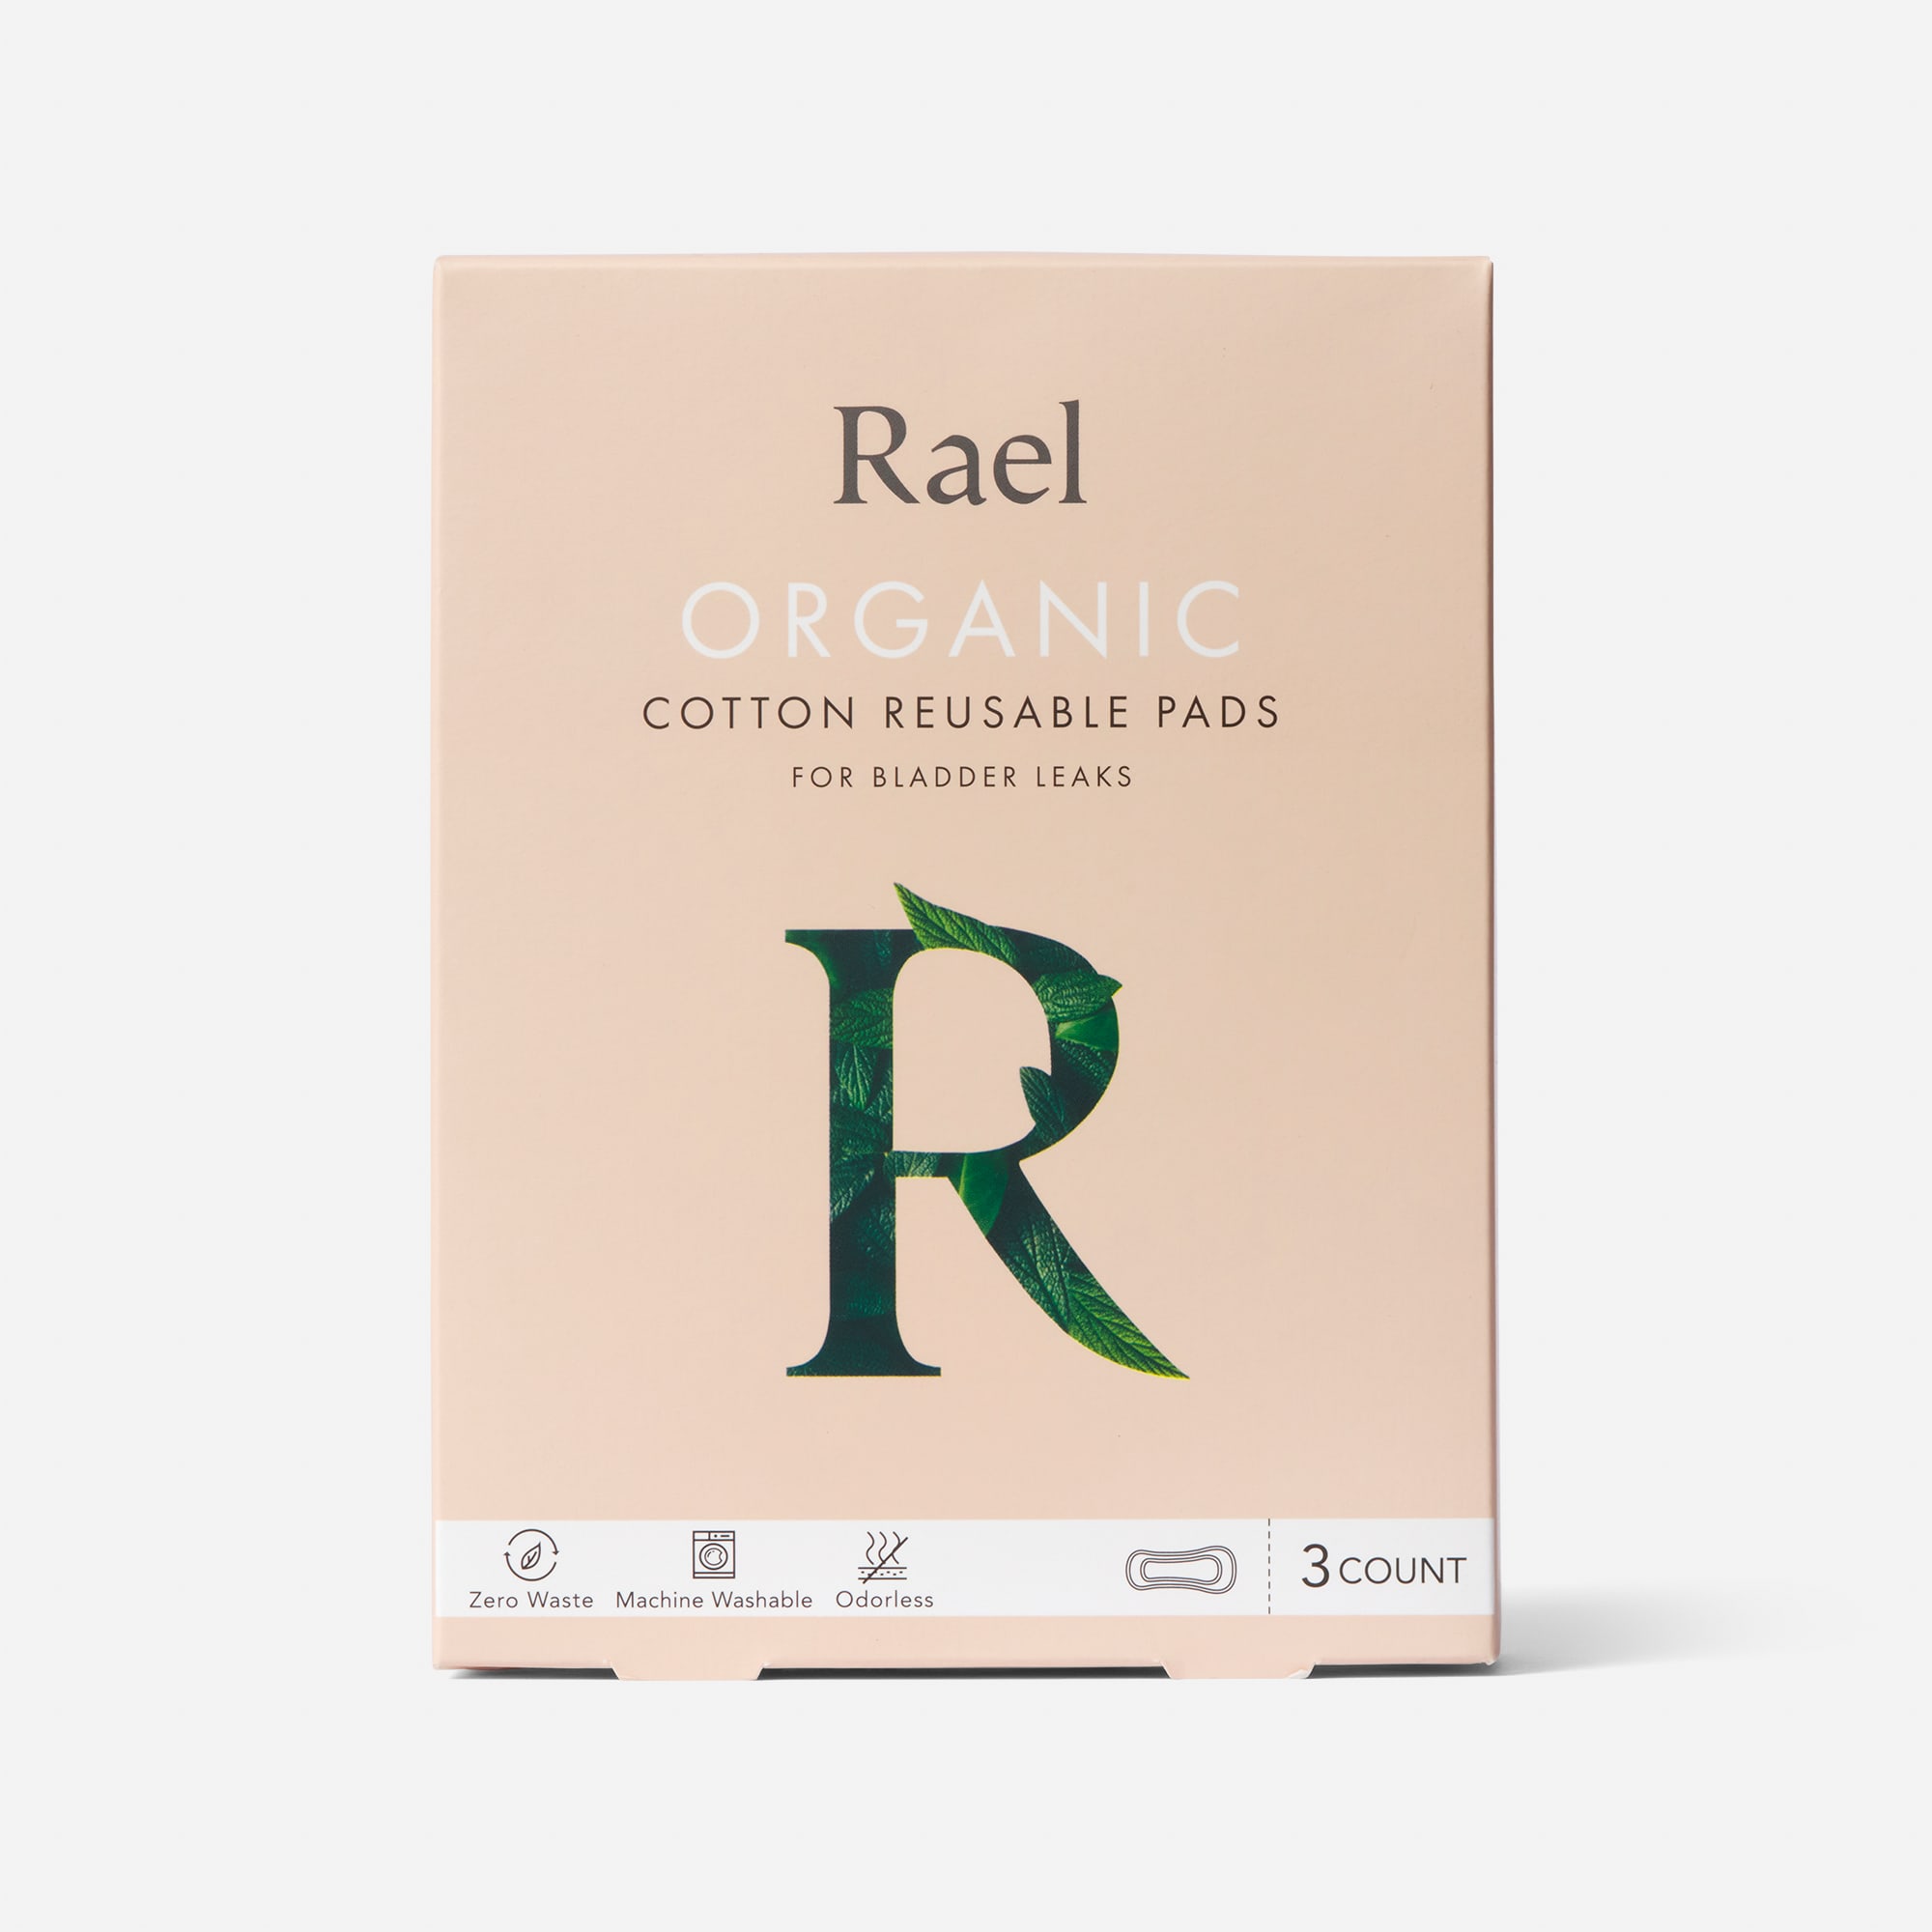 Buy Rael Reusable Period Underwear at